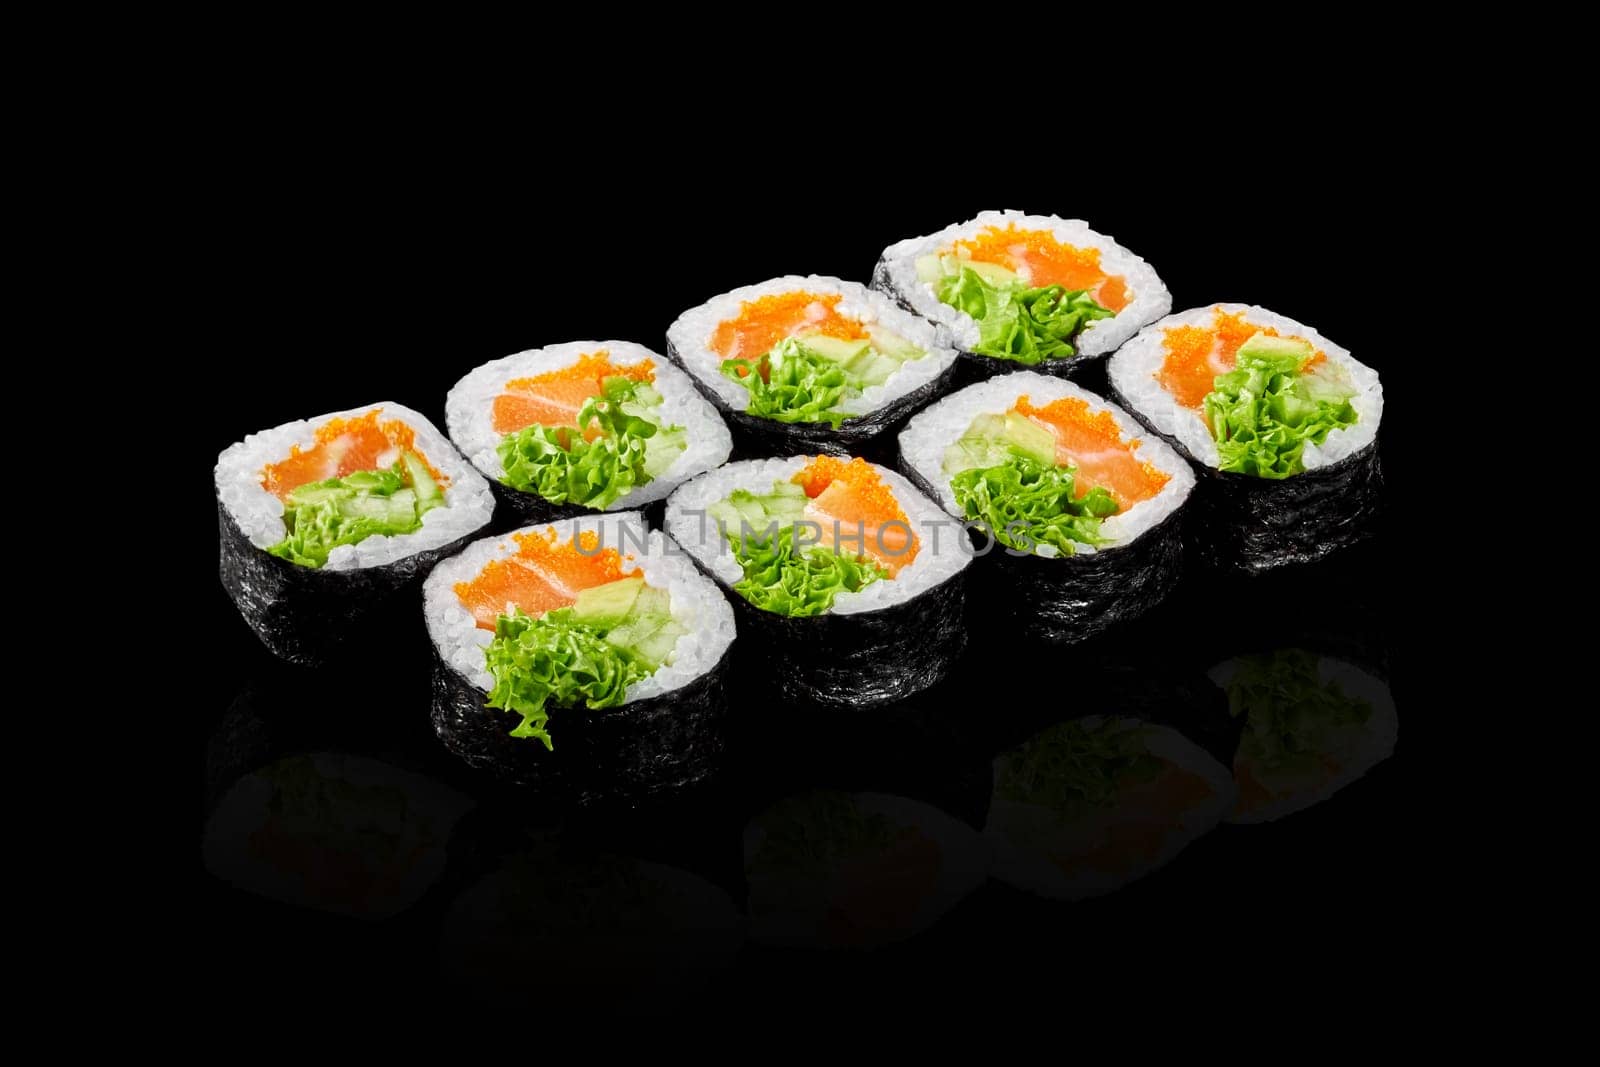 Futomaki rolls with salmon, tobiko and greens on black background by nazarovsergey